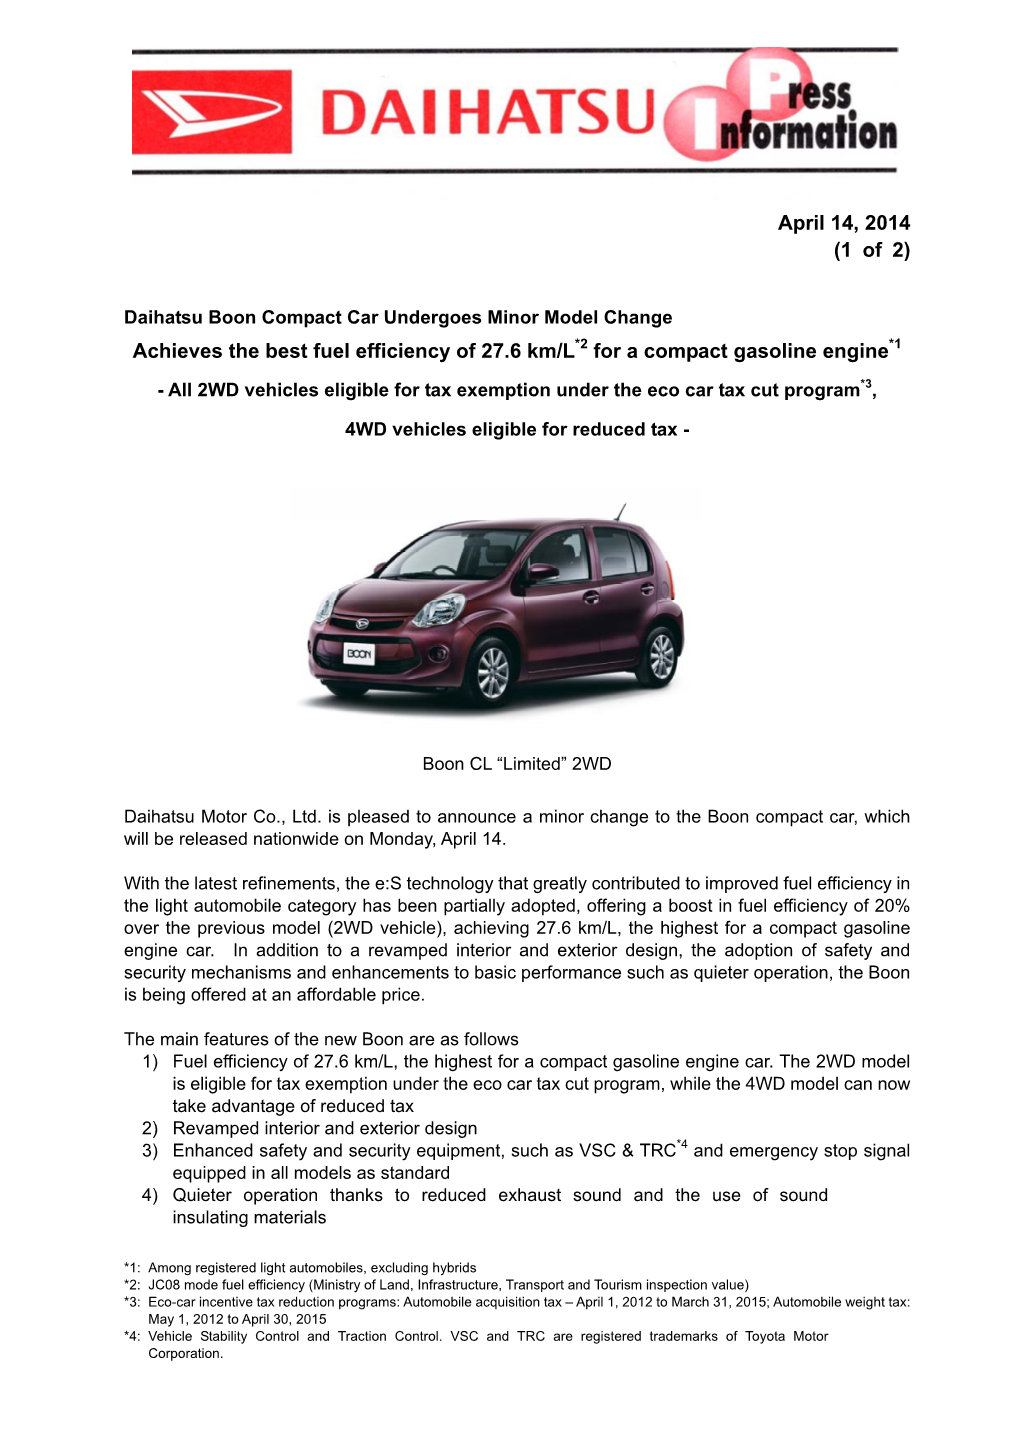 Apr. 14, 2014 Products & Technology Daihatsu Boon Compact Car